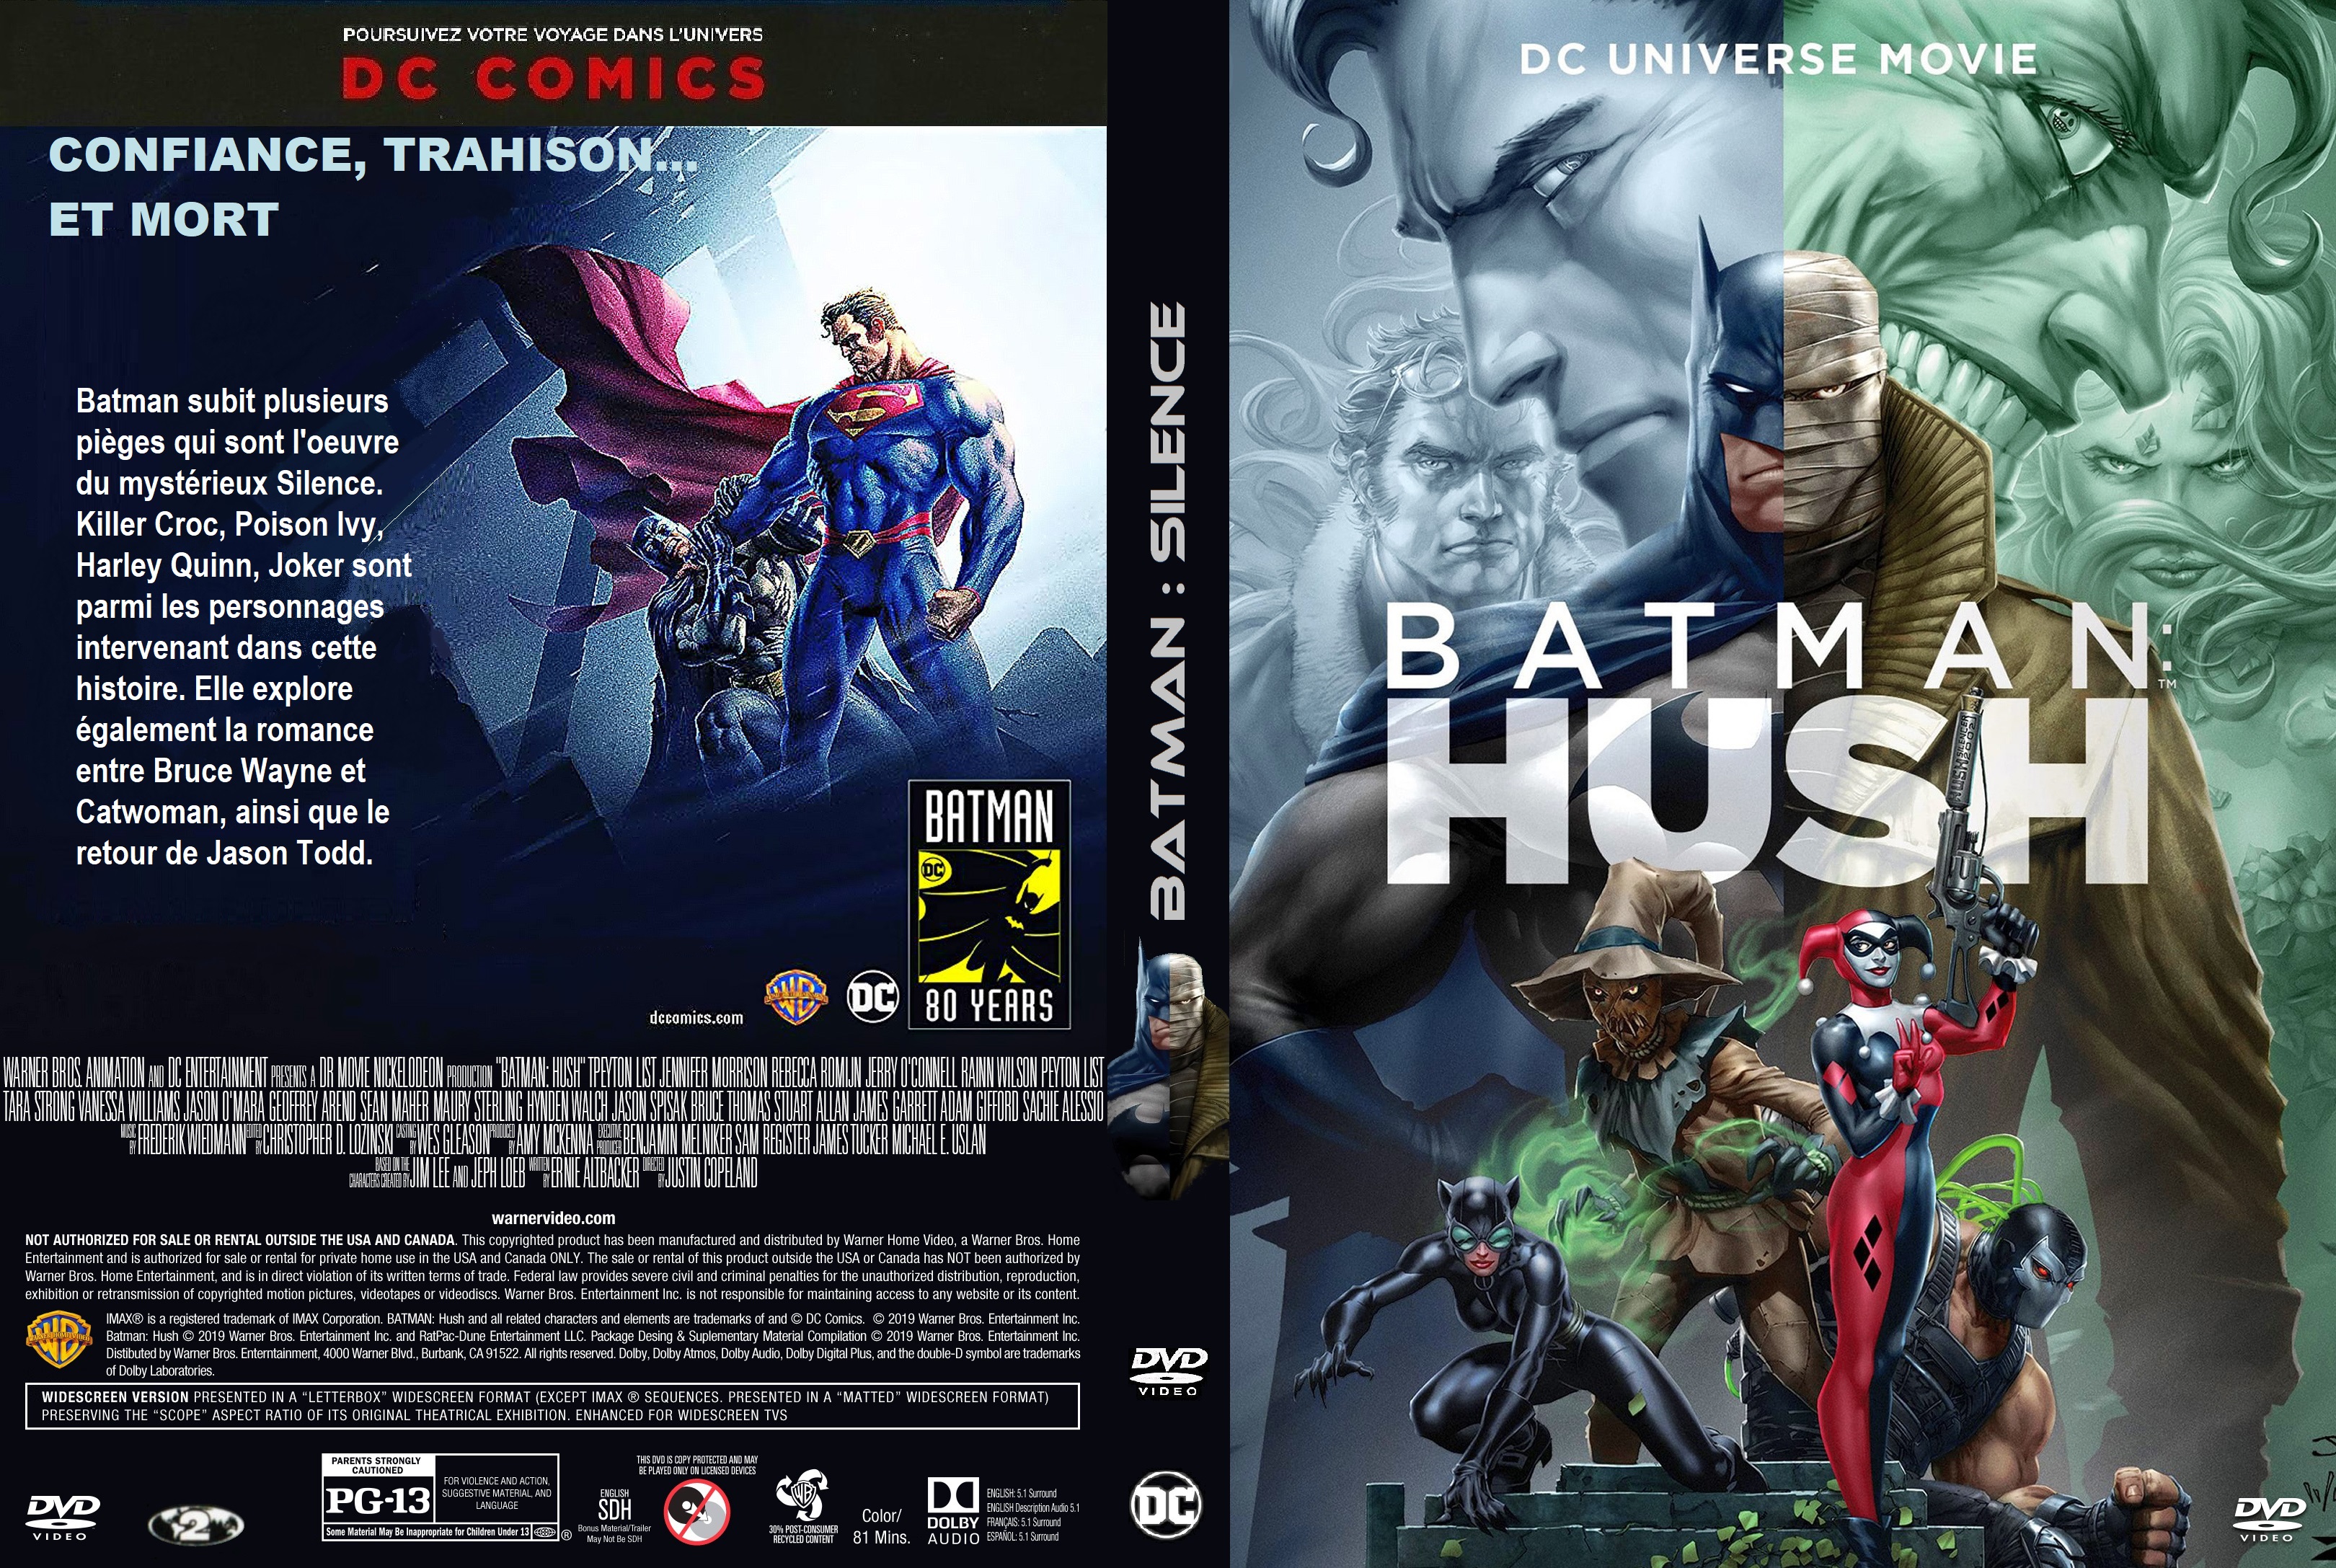 Jaquette DVD Batman Silence custom